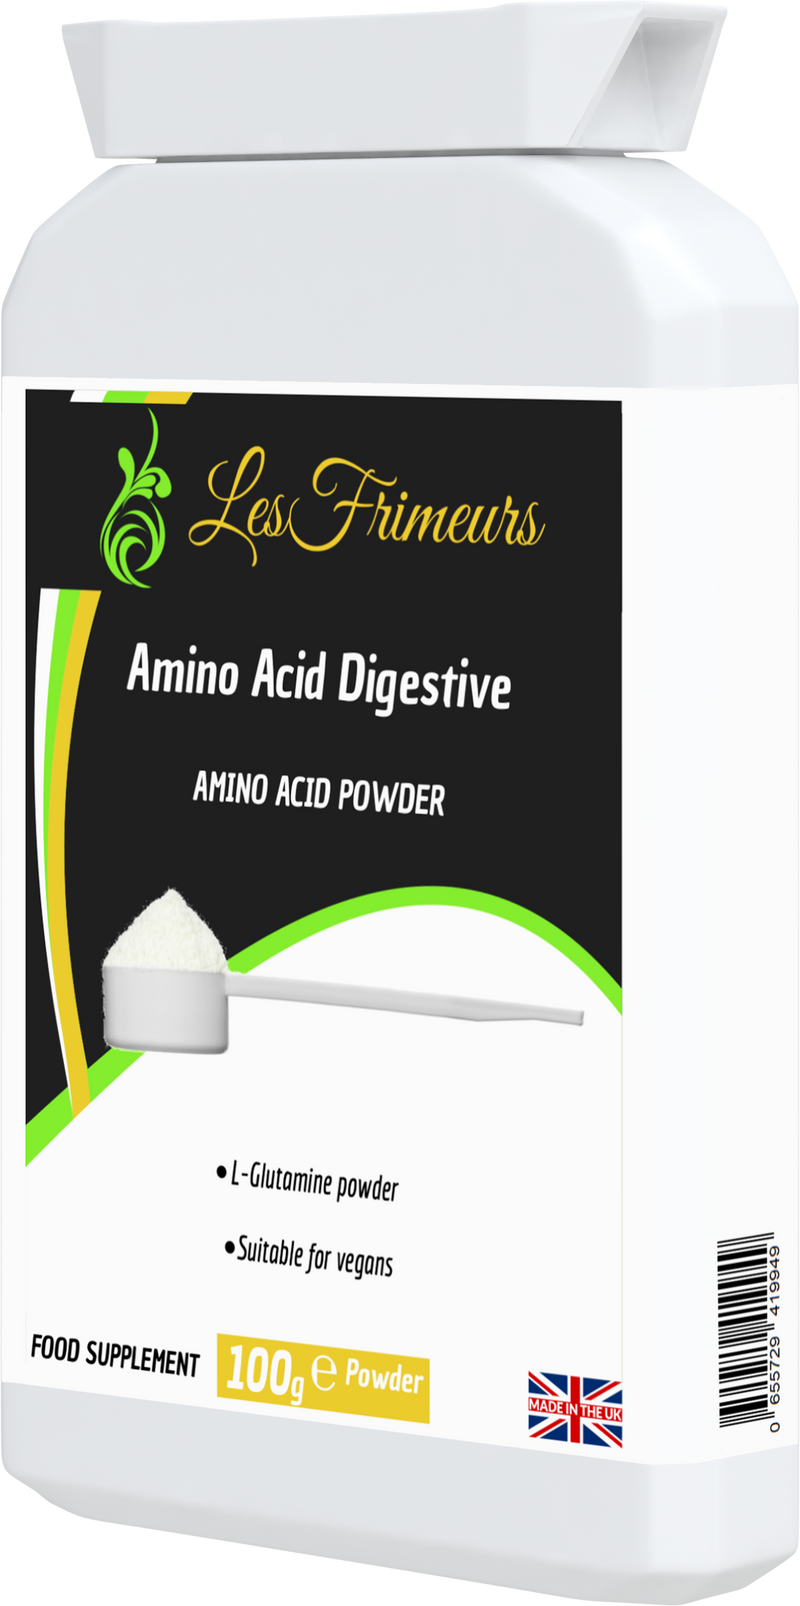 Amino Acid Digestive